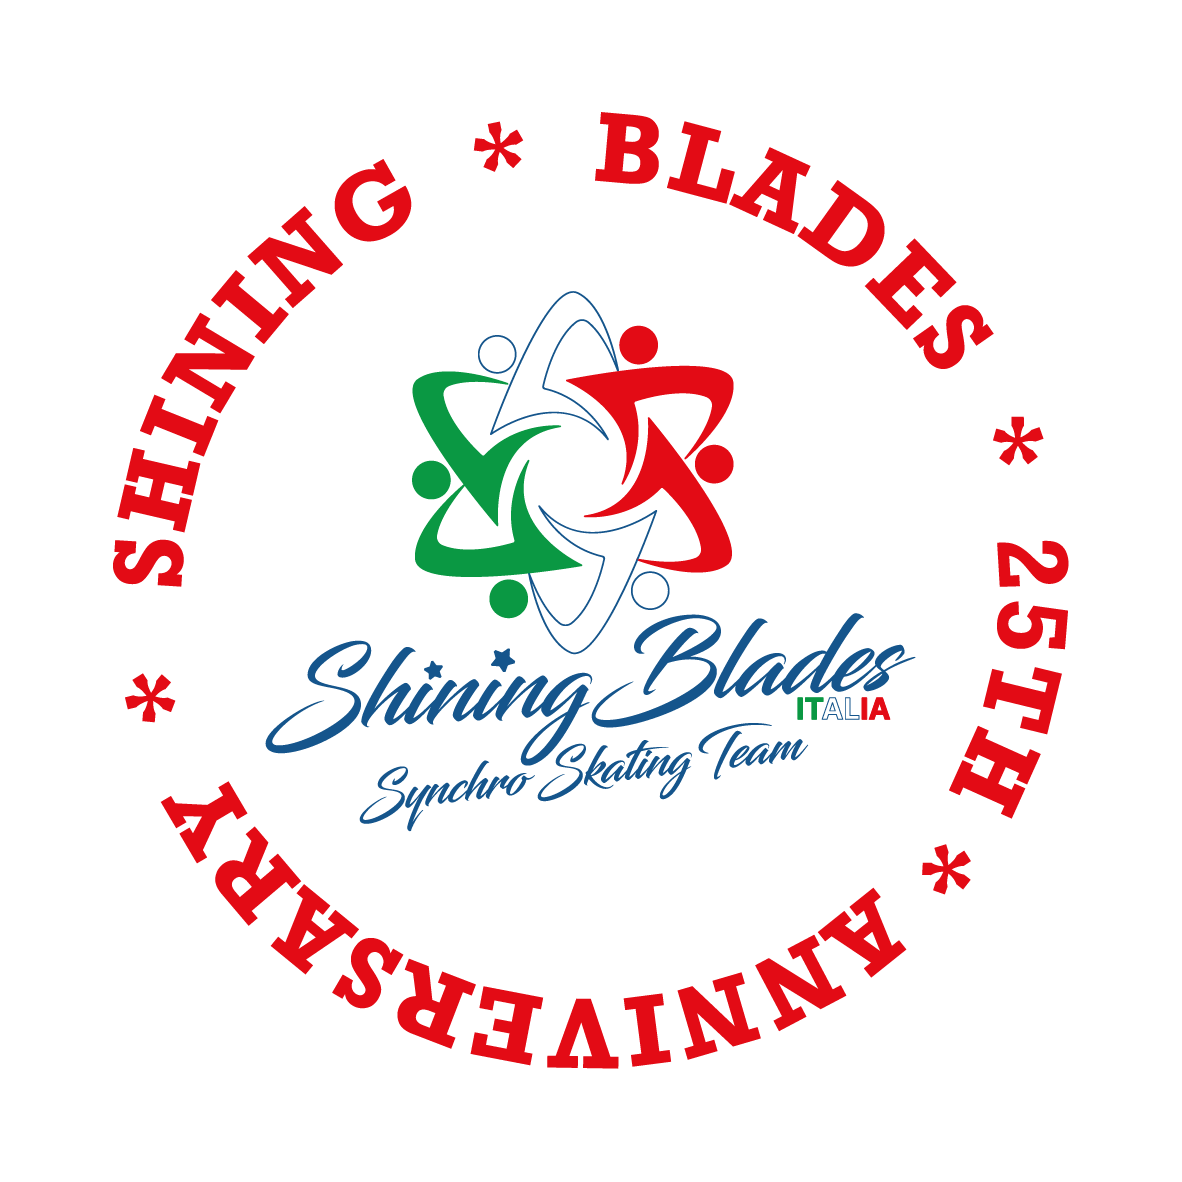 Shining Blades - Synchro Skating Team Italy